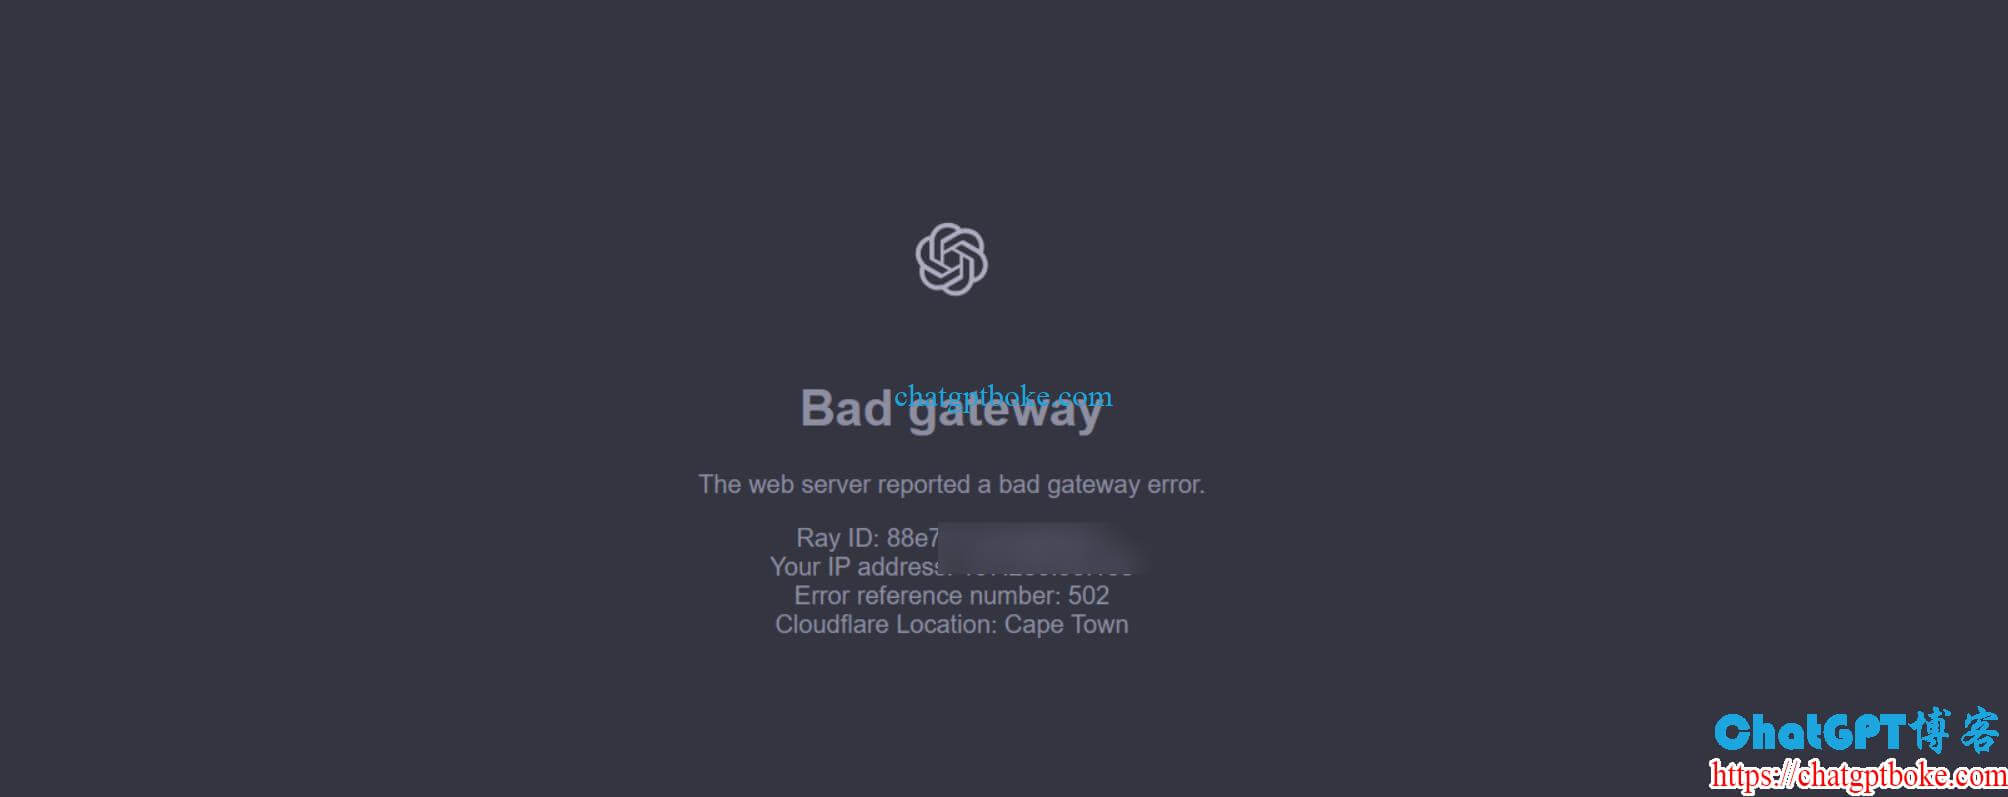 ChatGPT Bad gateway